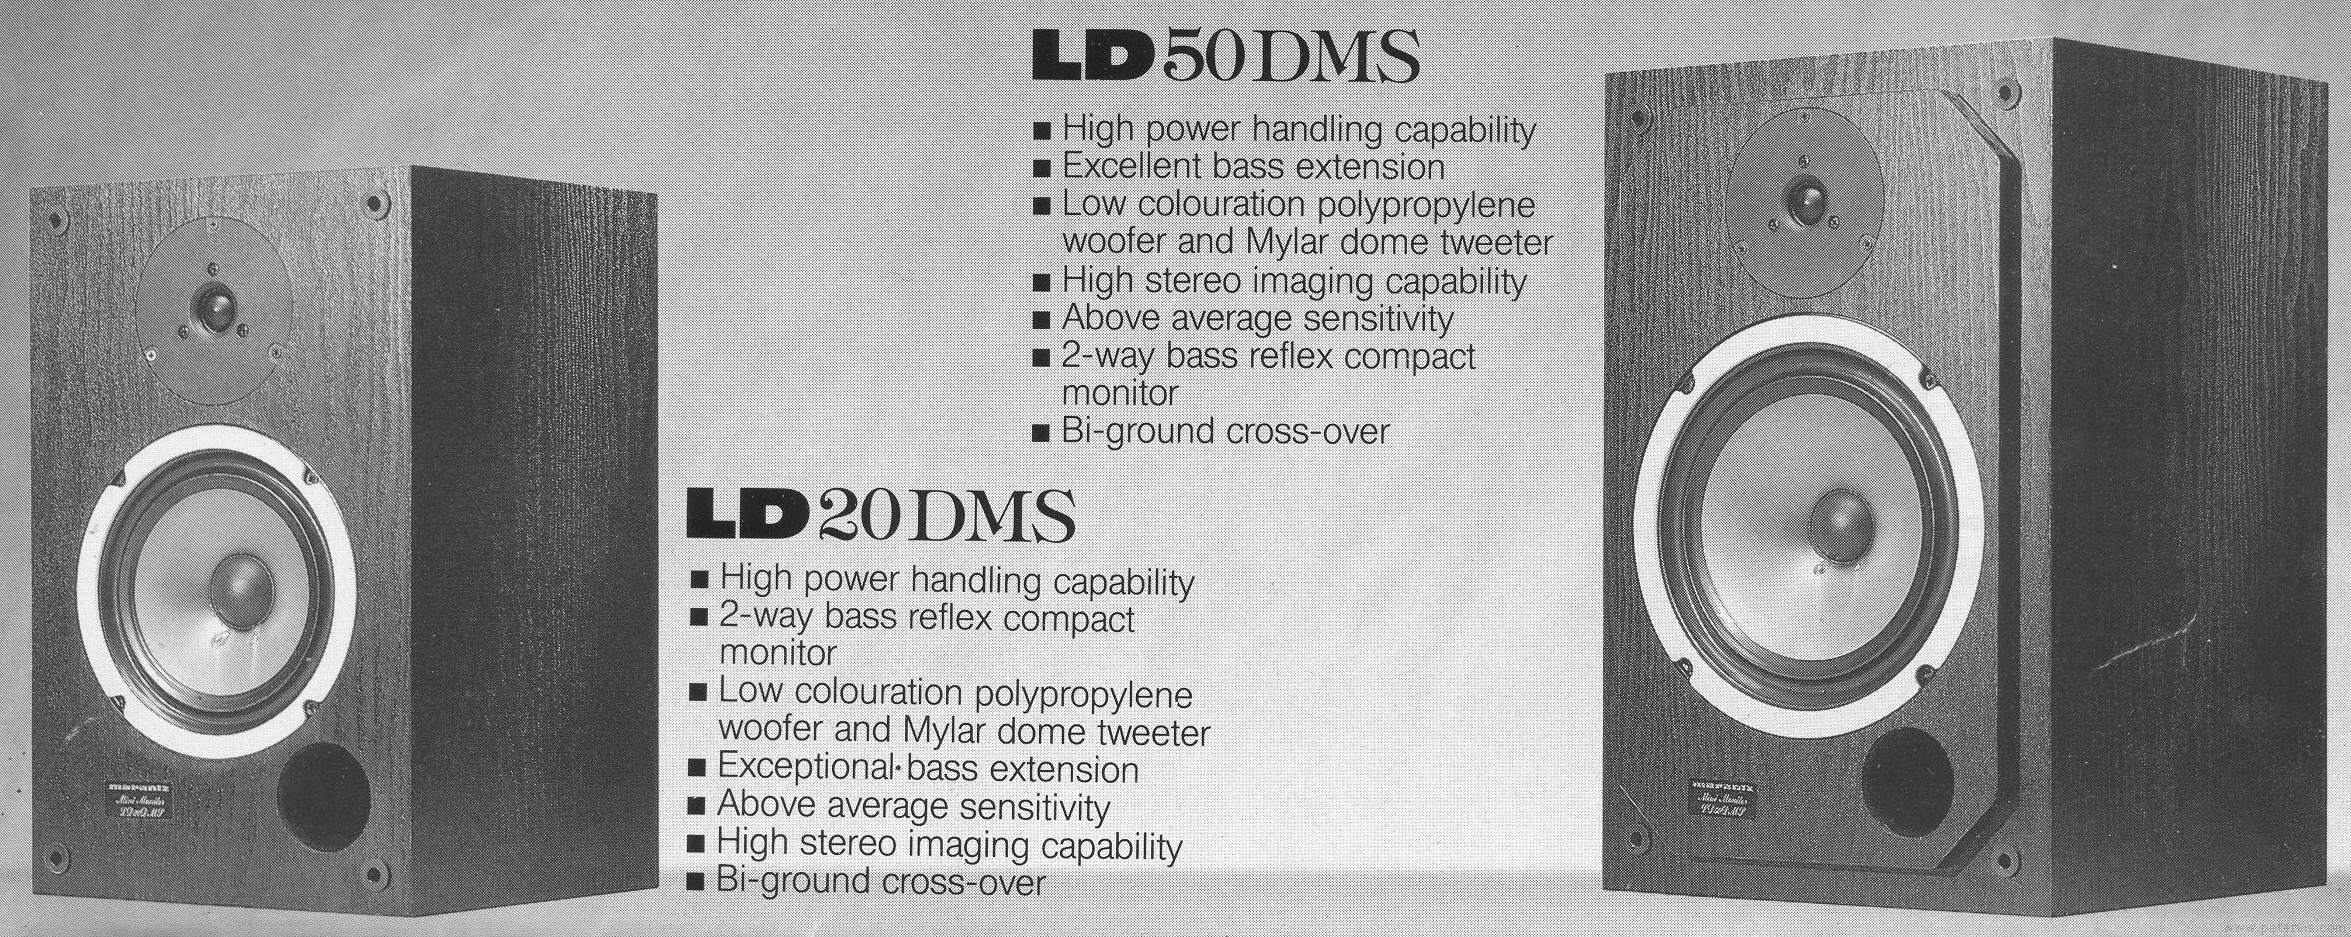 LD50 DMS and LD20 DMS